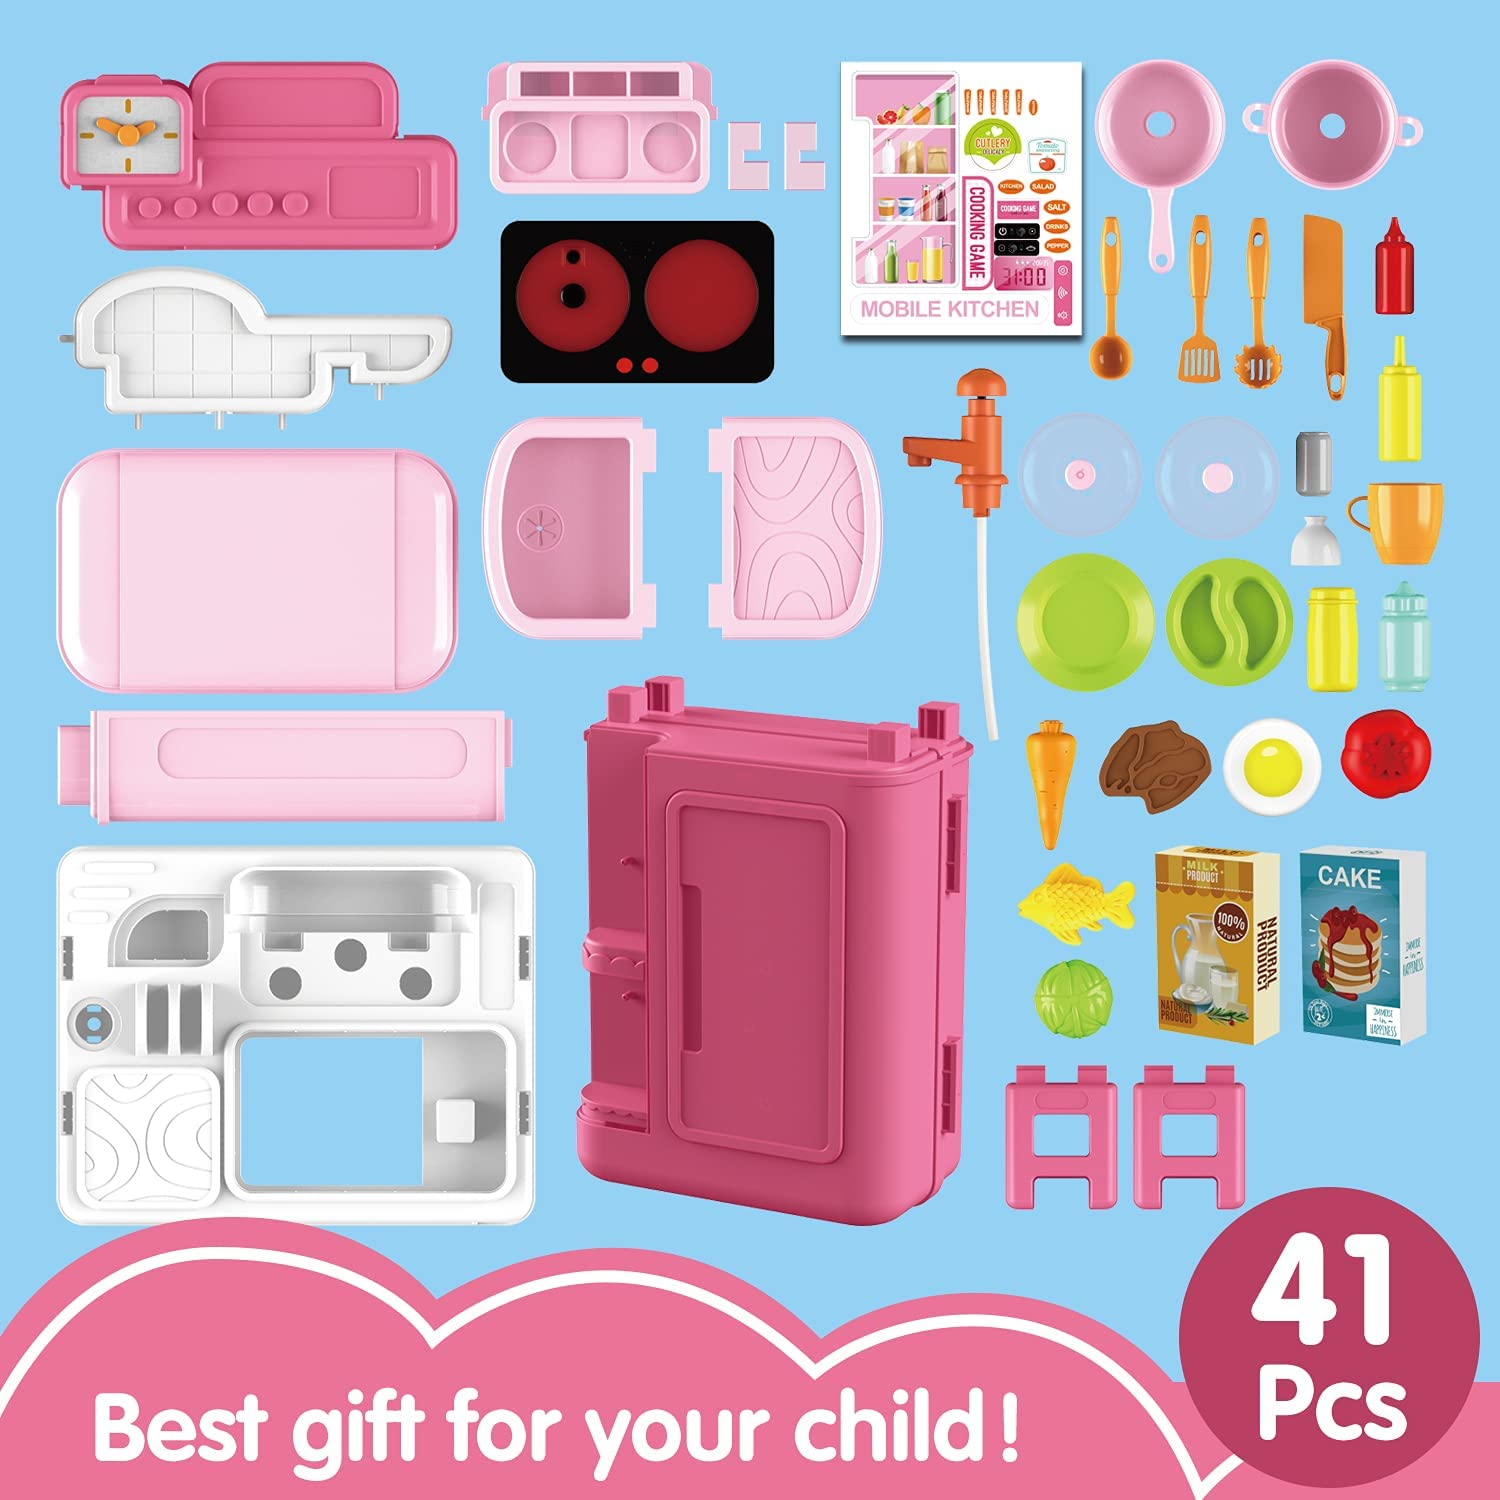 Pretend Play Kitchen Set for Toddler, 41 PCS